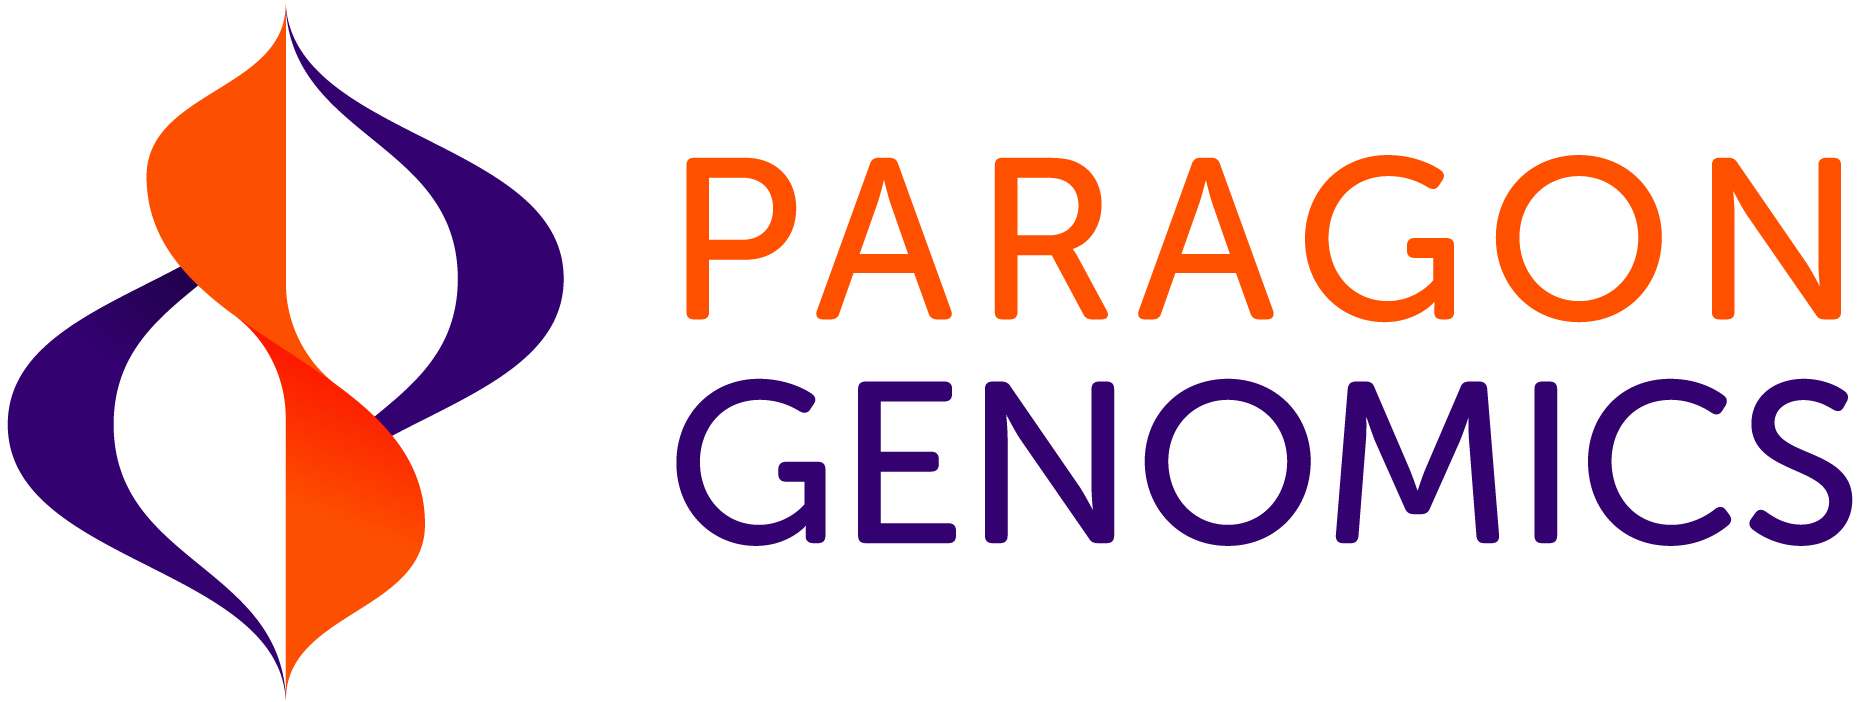 Paragon Genomics - Exatype NGS SARS-CoV-2